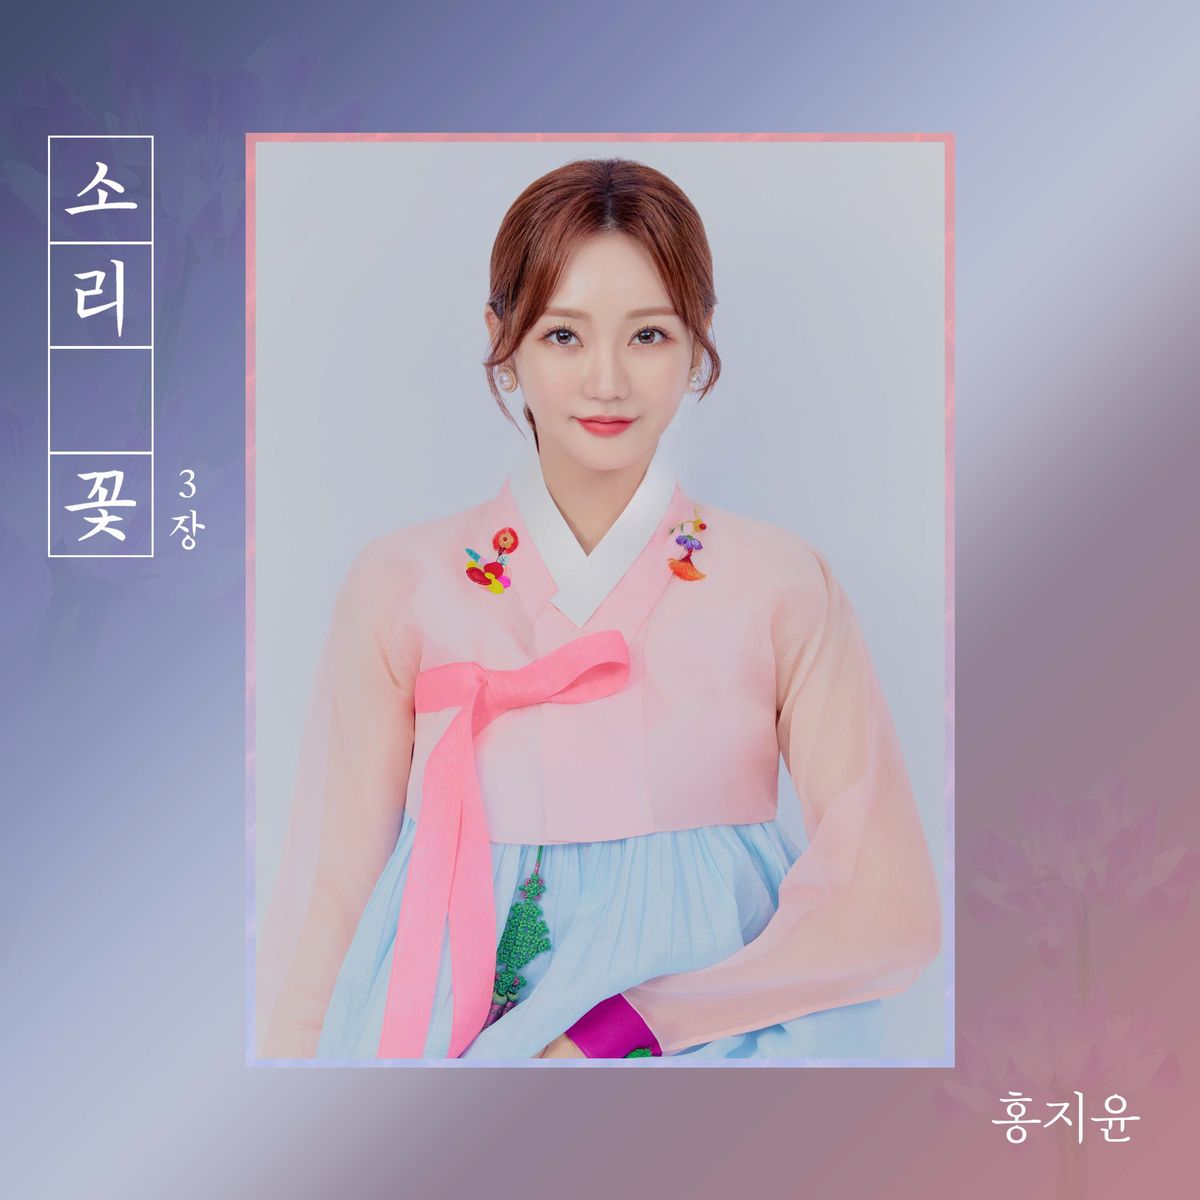 HONG JI YUN – Chapter 3 of Sound Flower – Single